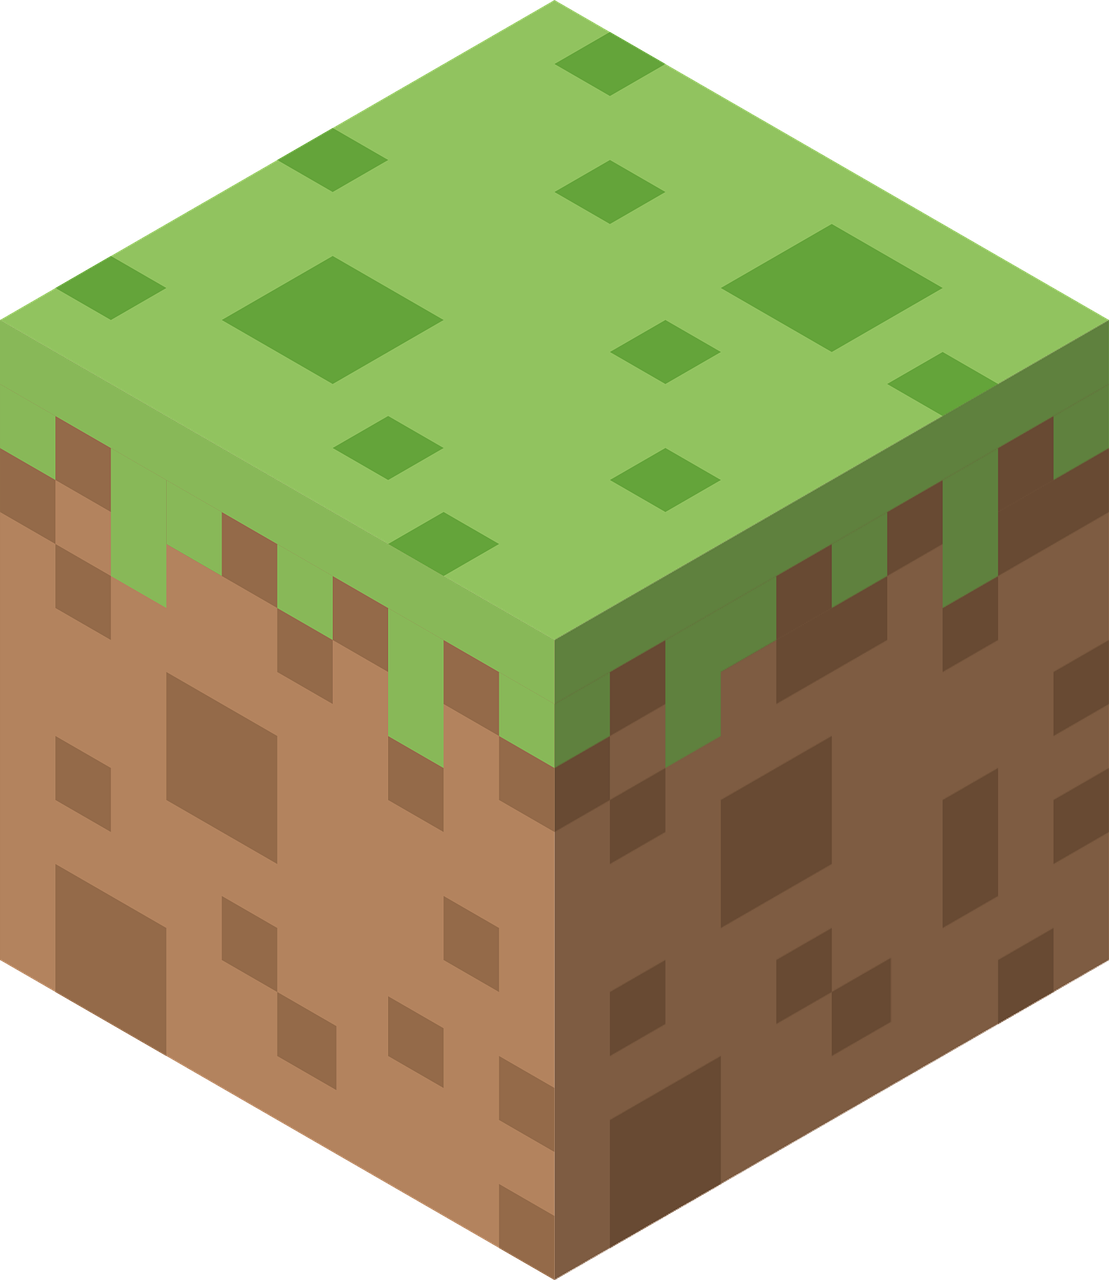  How To Craft Ice Blocks In Minecraft 